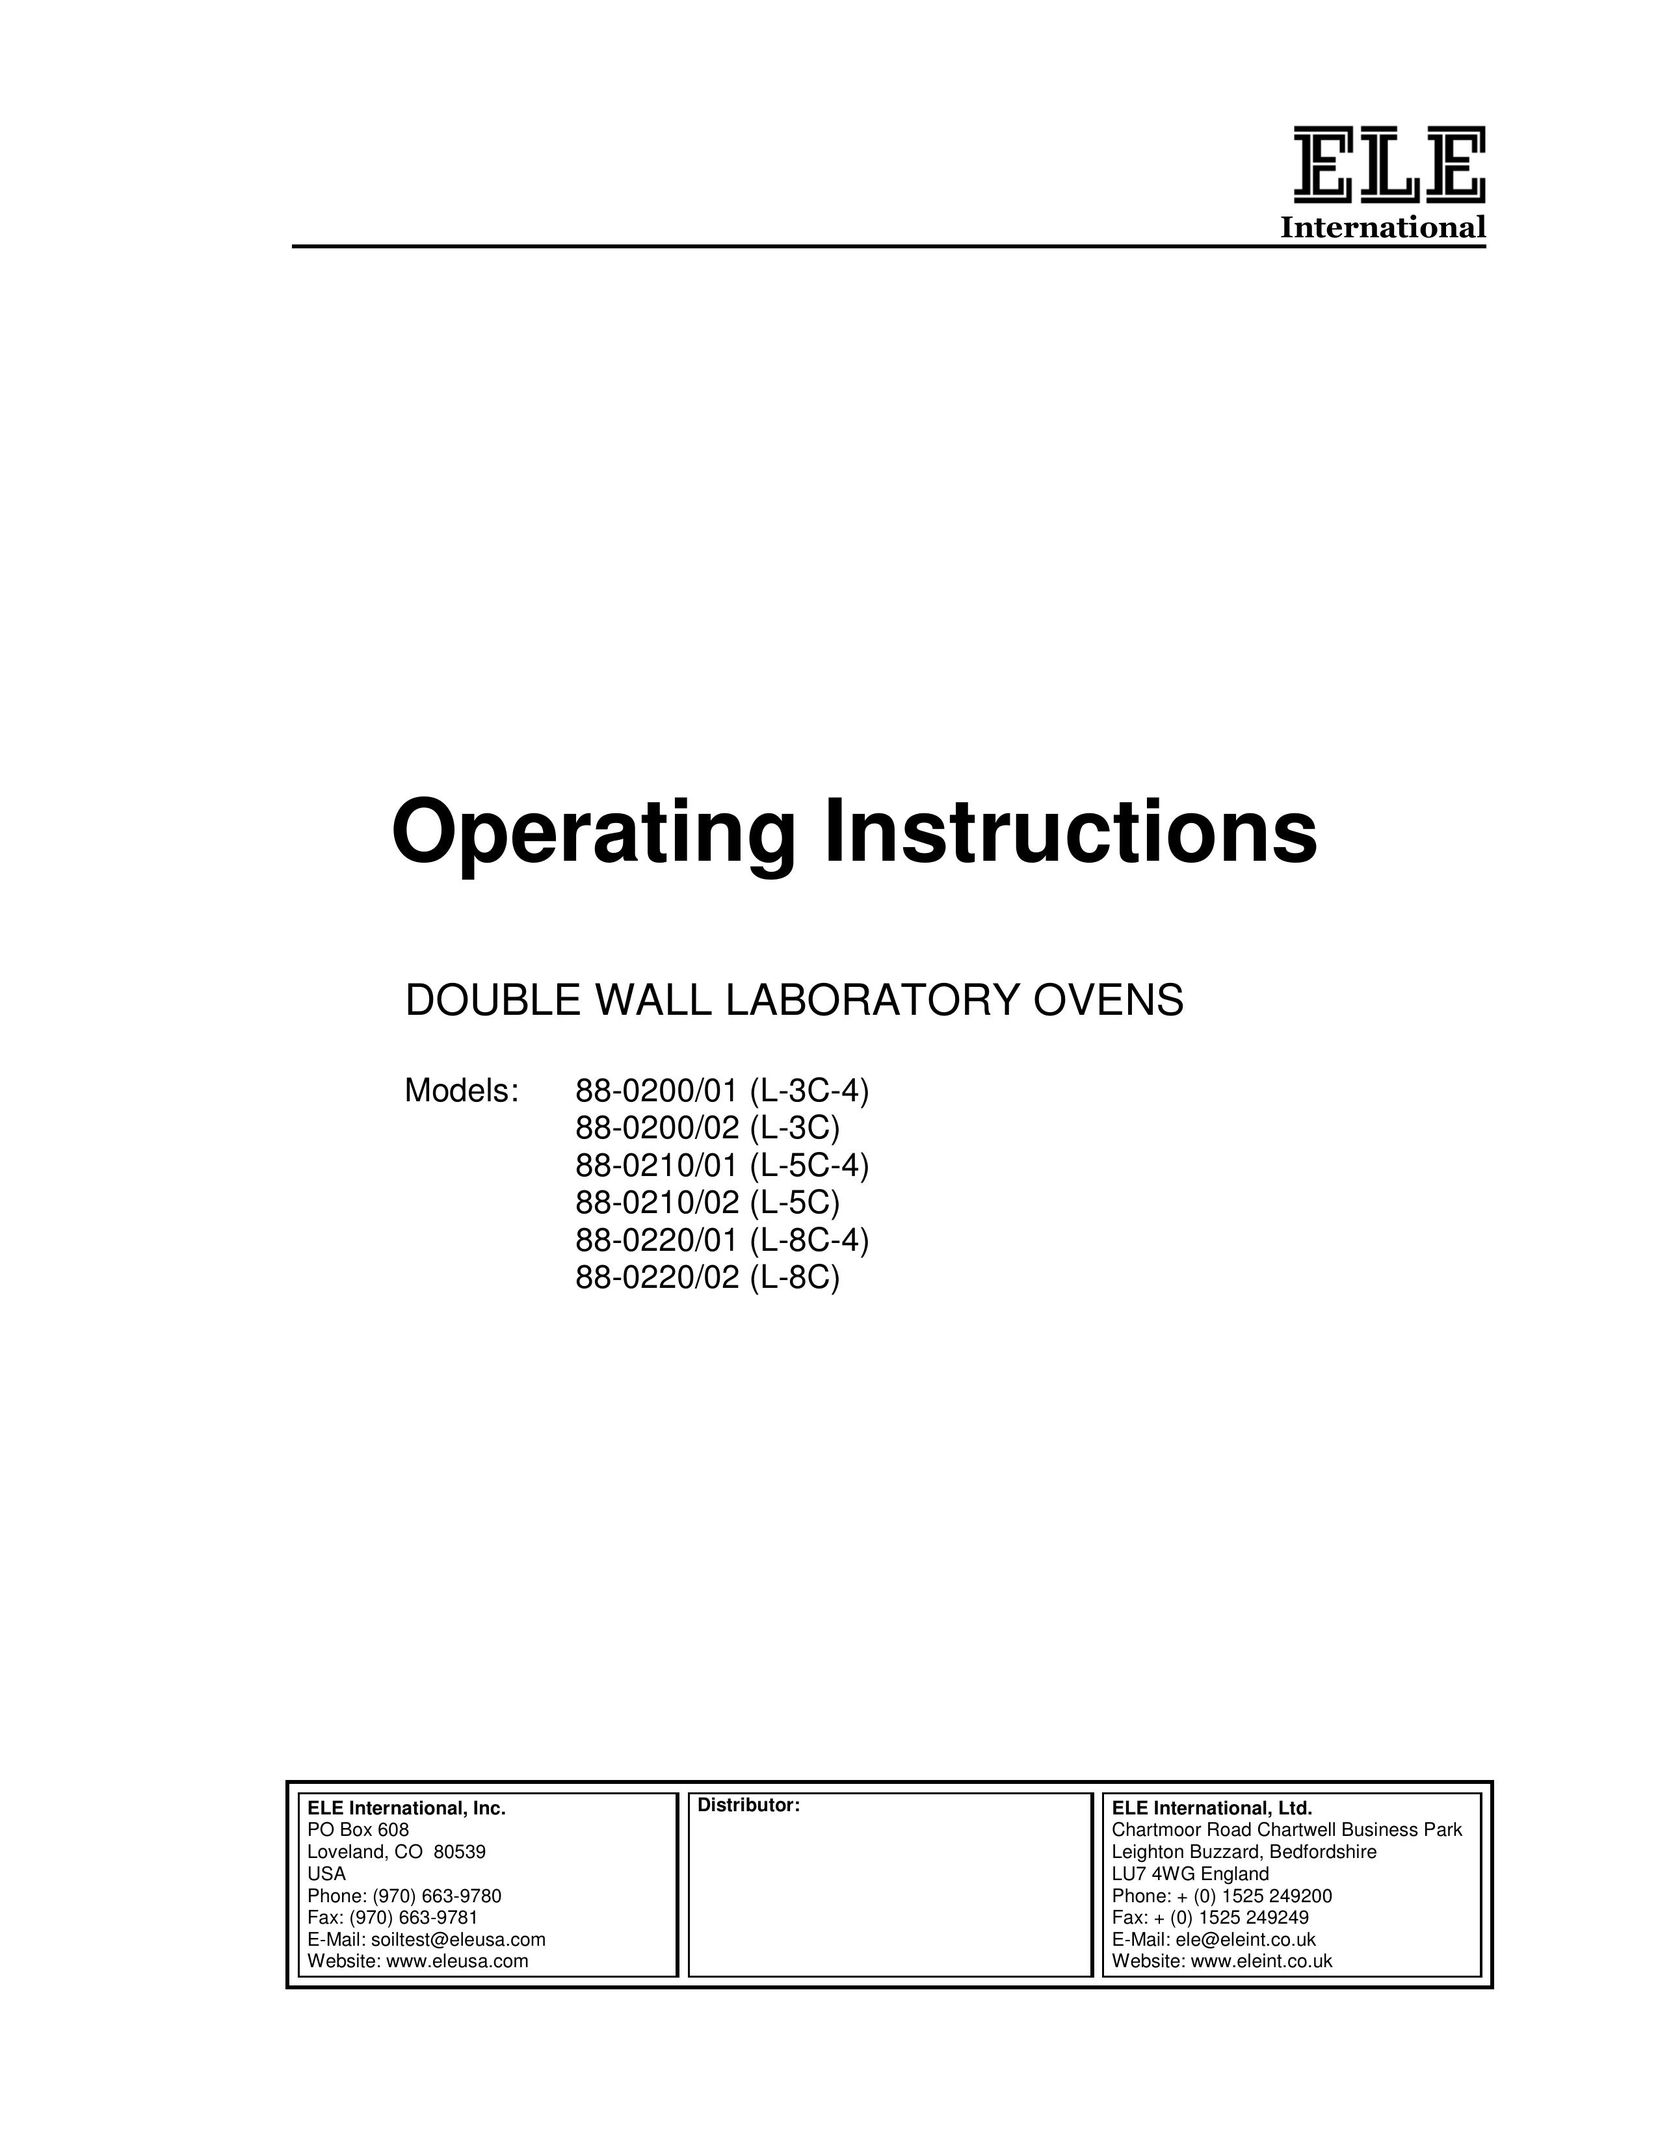 Ele 88-0220/02 (L-8C) Double Oven User Manual